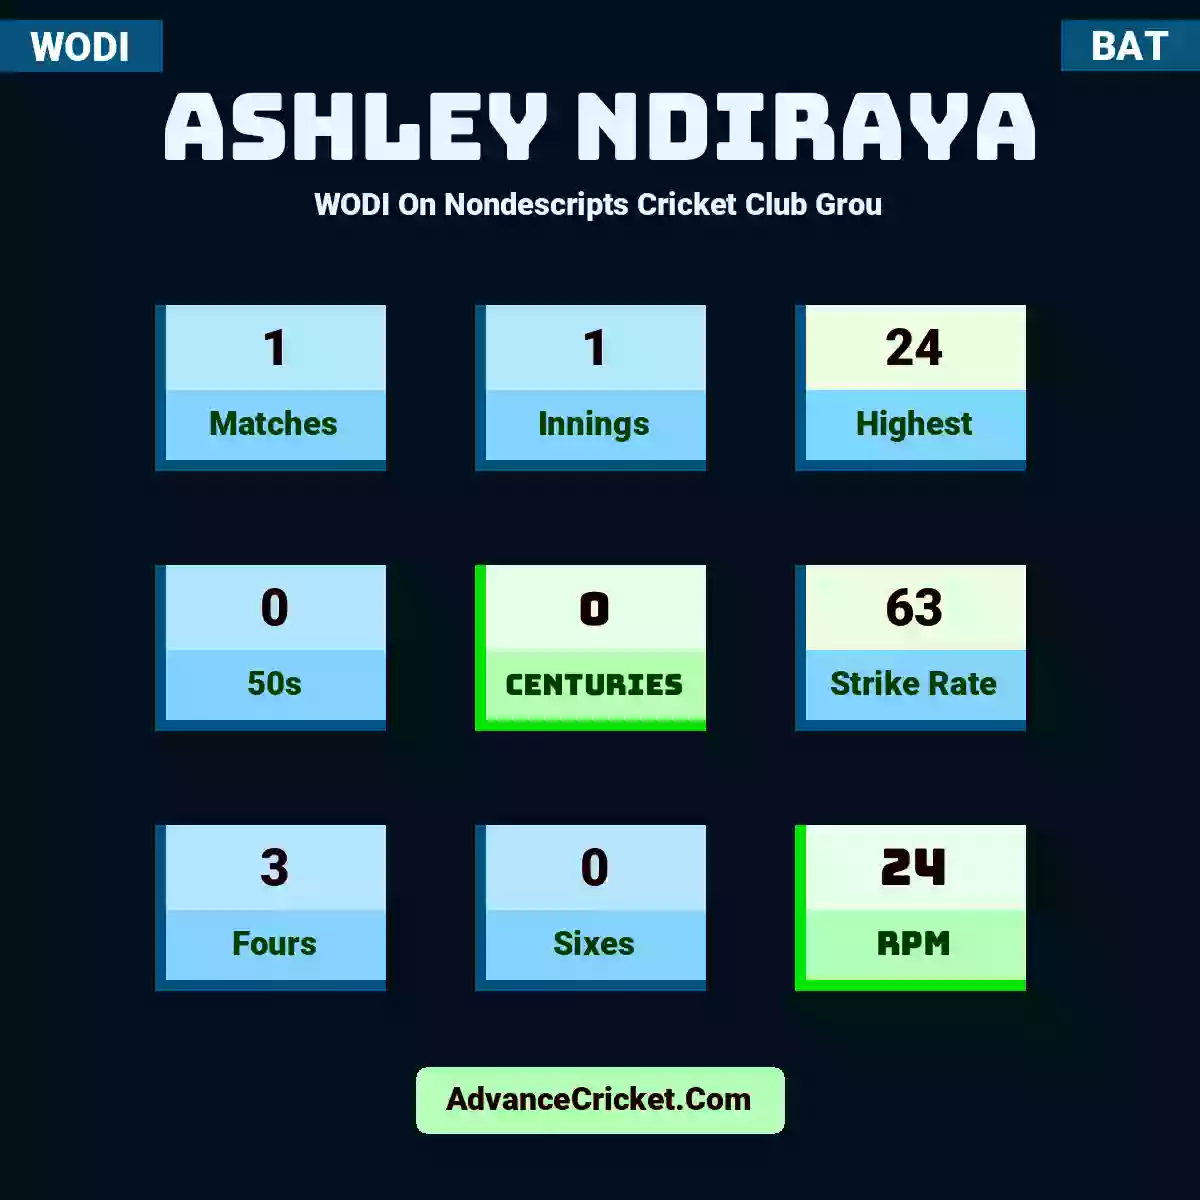 Ashley Ndiraya WODI  On Nondescripts Cricket Club Grou, Ashley Ndiraya played 1 matches, scored 24 runs as highest, 0 half-centuries, and 0 centuries, with a strike rate of 63. A.Ndiraya hit 3 fours and 0 sixes, with an RPM of 24.